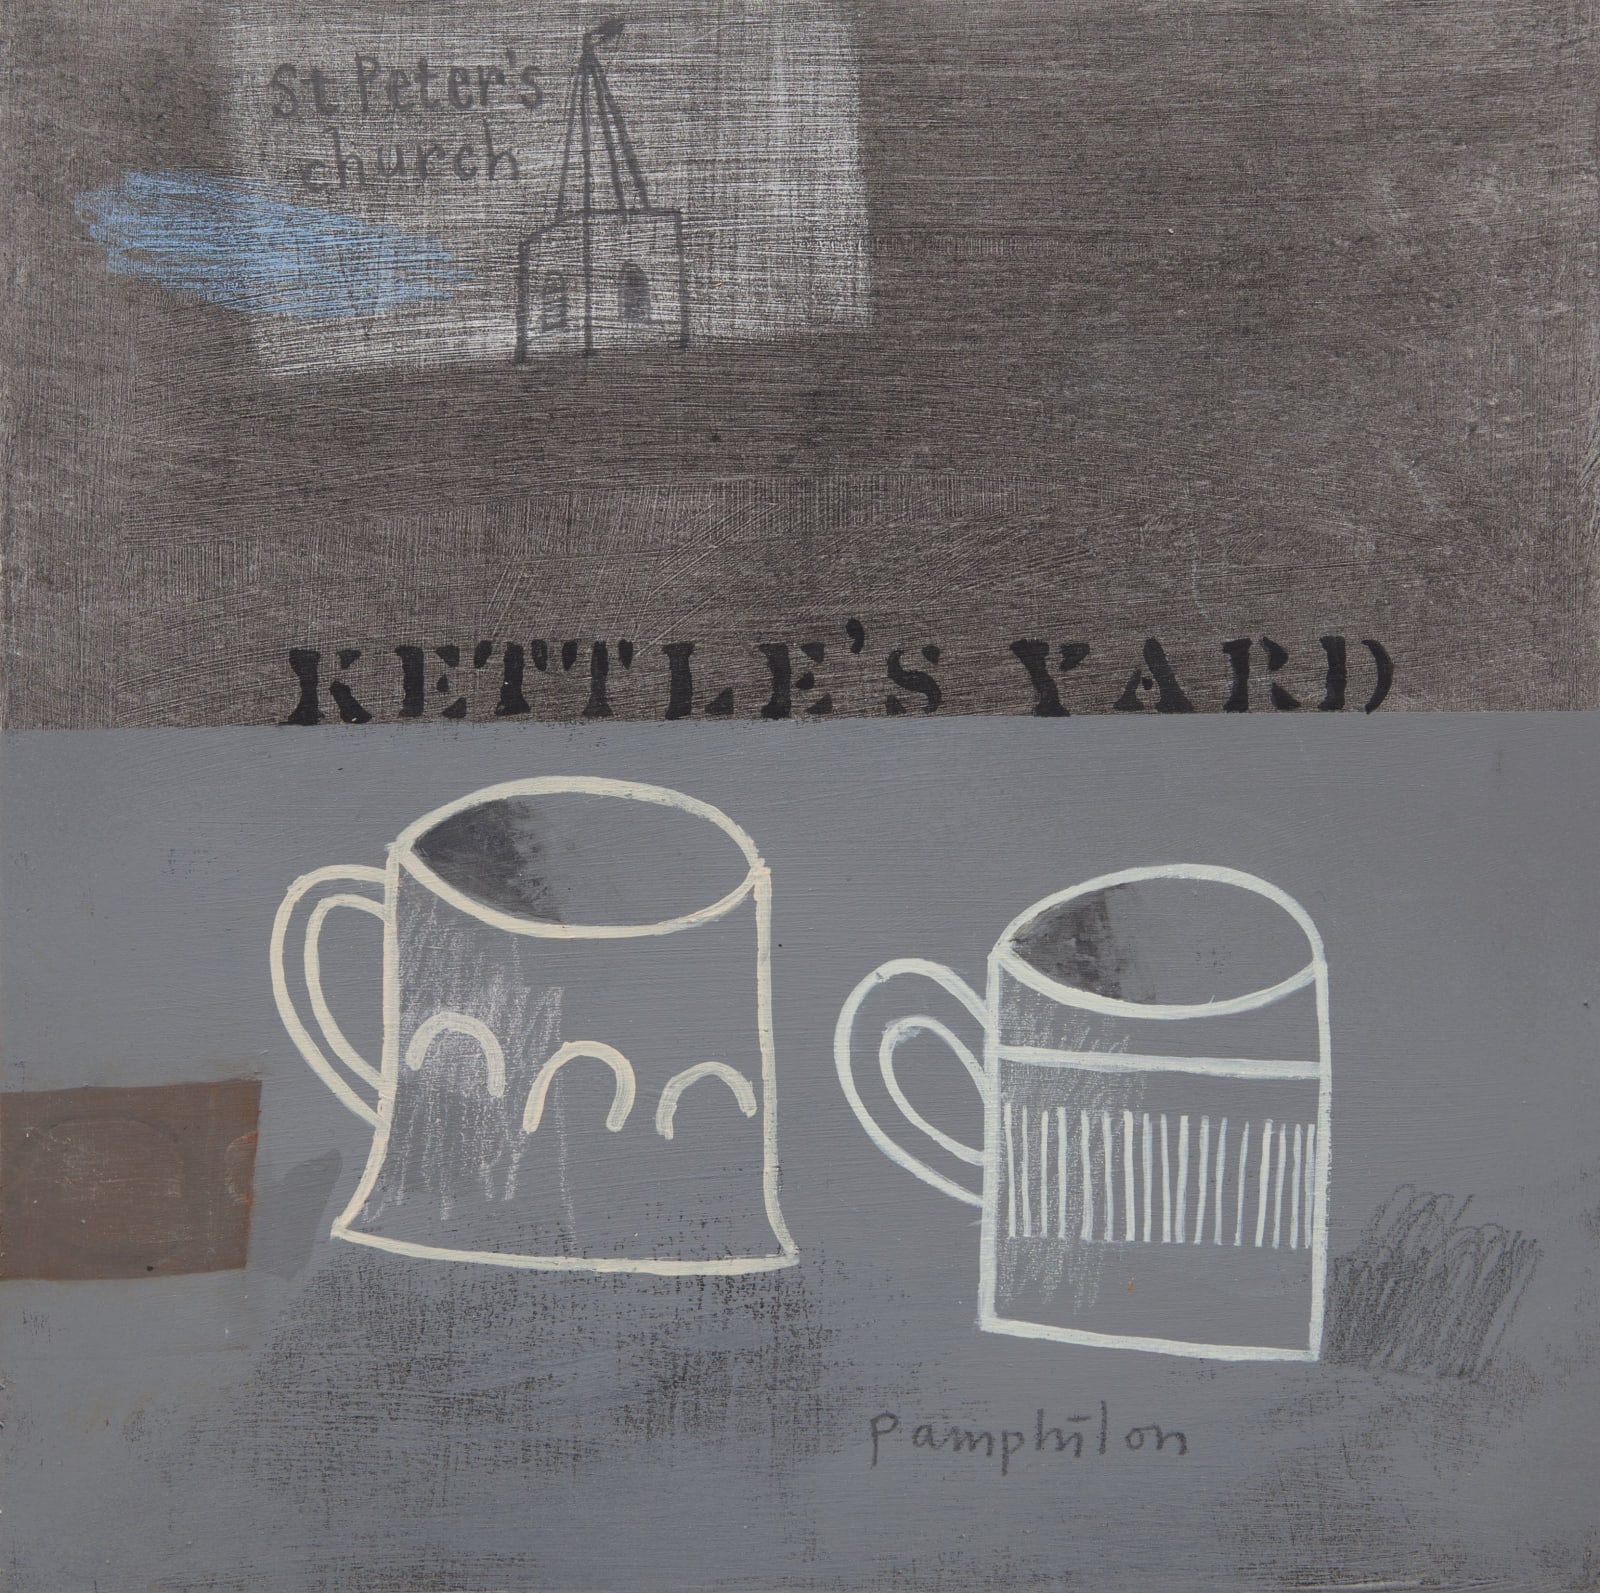 Elaine Pamphilon, Kettle's Yard